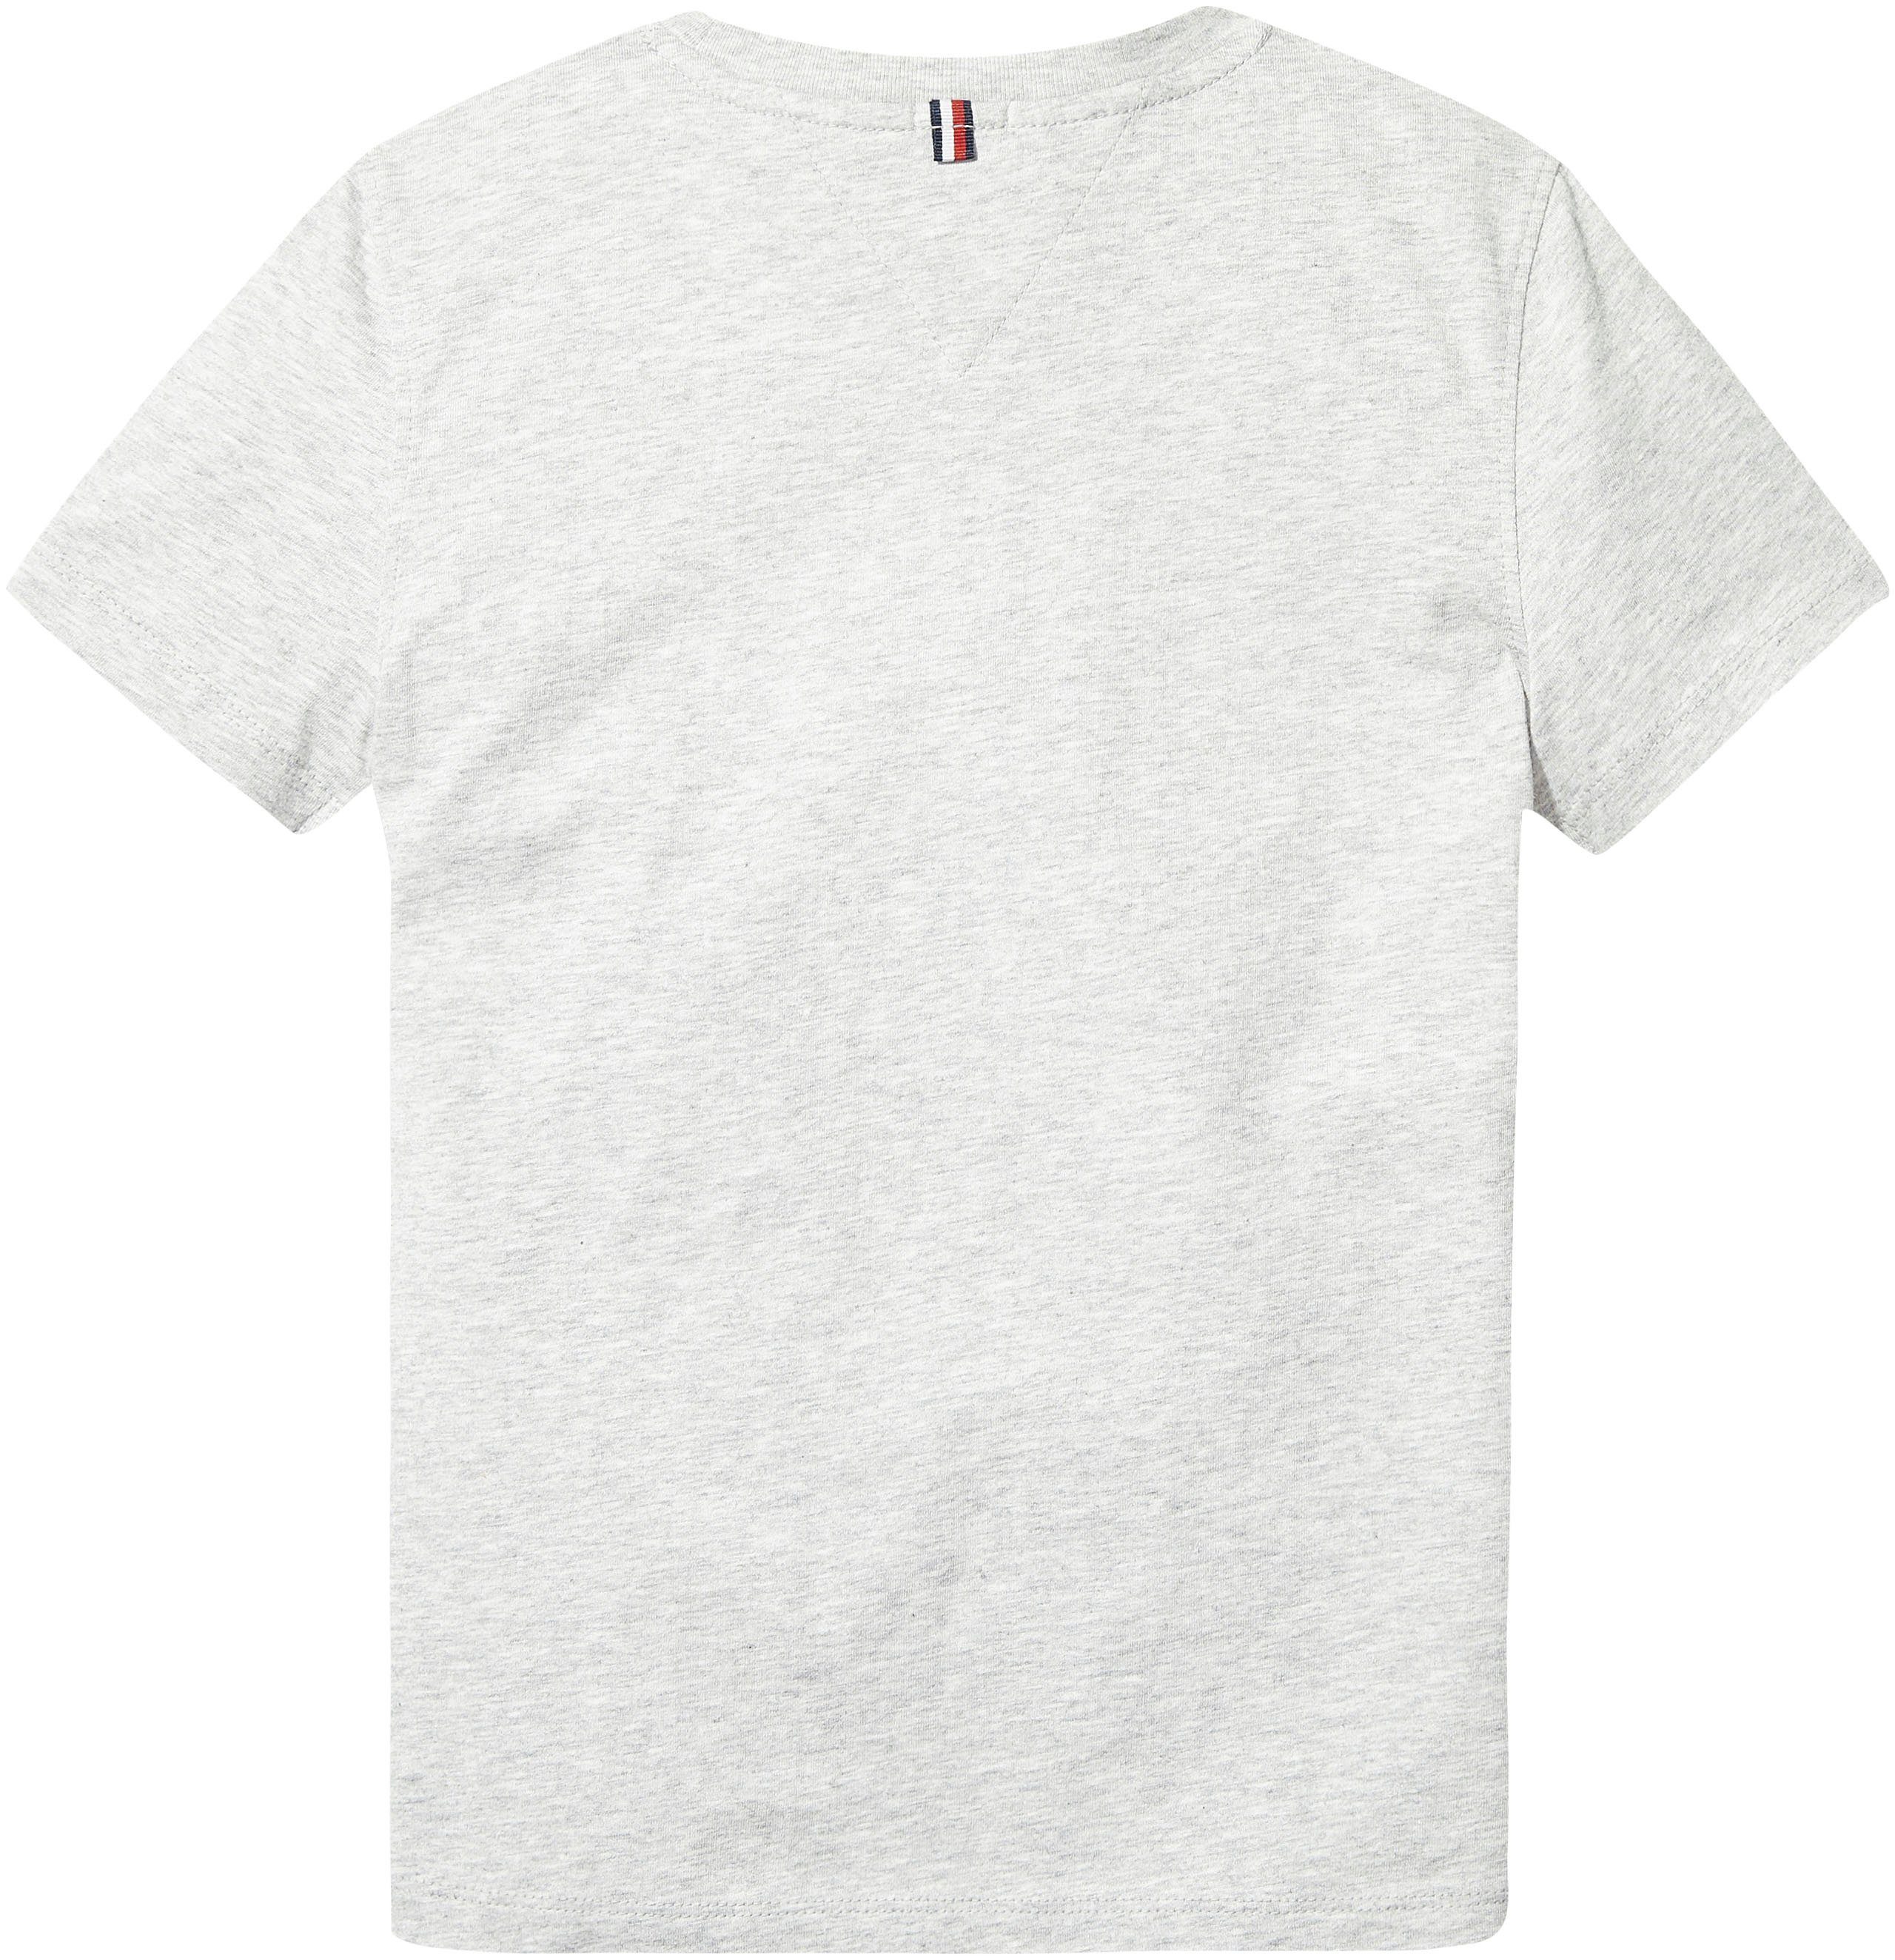 KNIT BASIC Tommy Jungen BOYS CN für Hilfiger T-Shirt